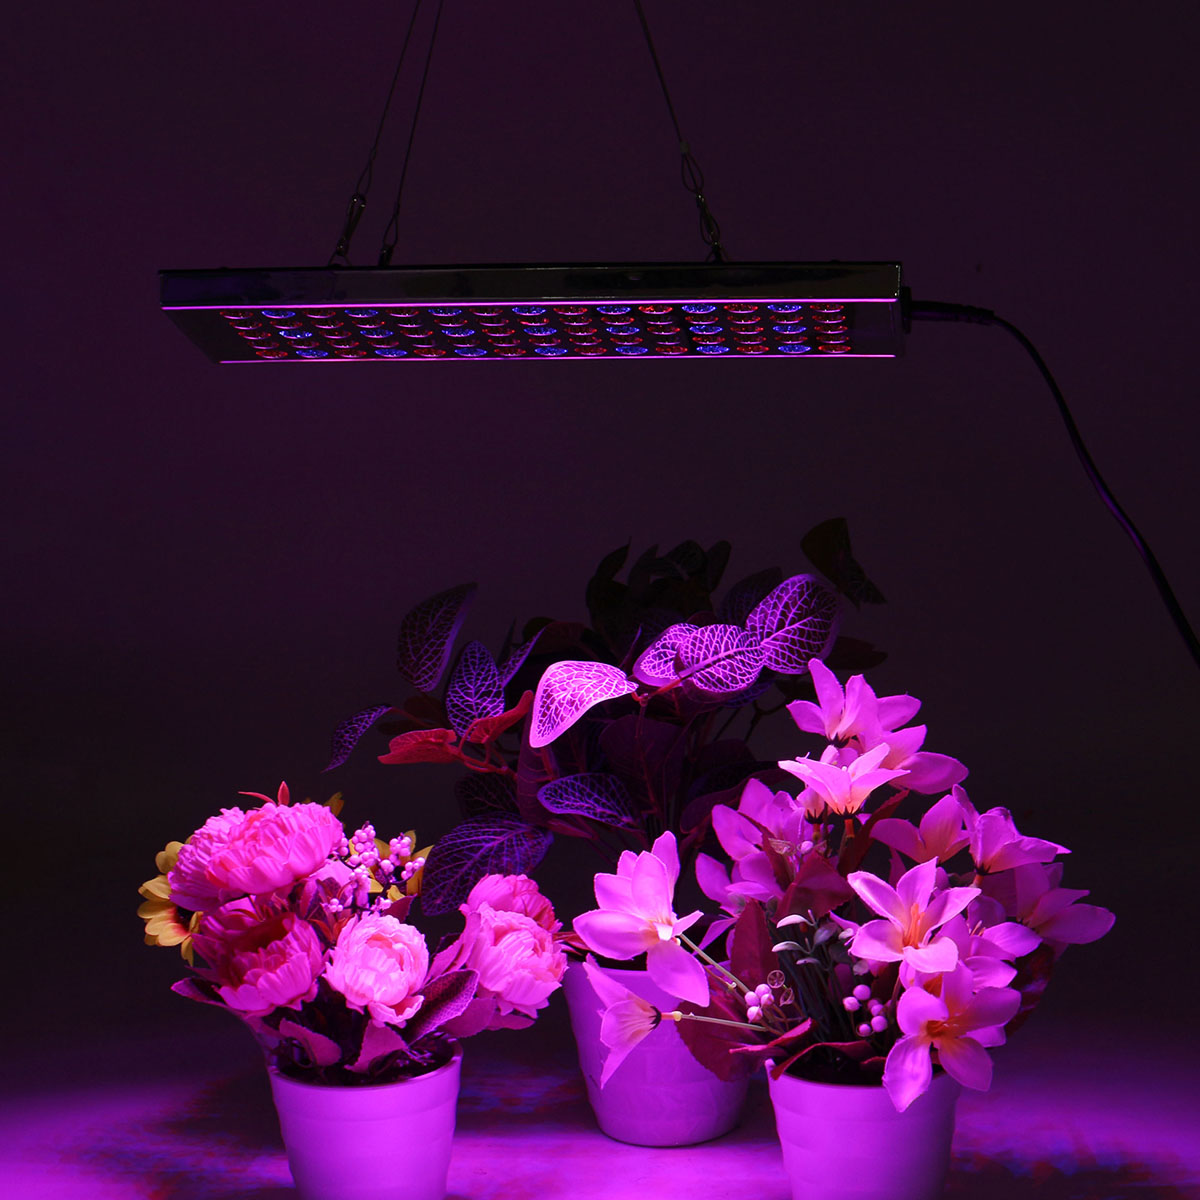 800W-LED-Grow-Light-Full-Spectrum-Growing-Plant-Lamp-For-Hydroponics-Veg-Indoor-1807202-7